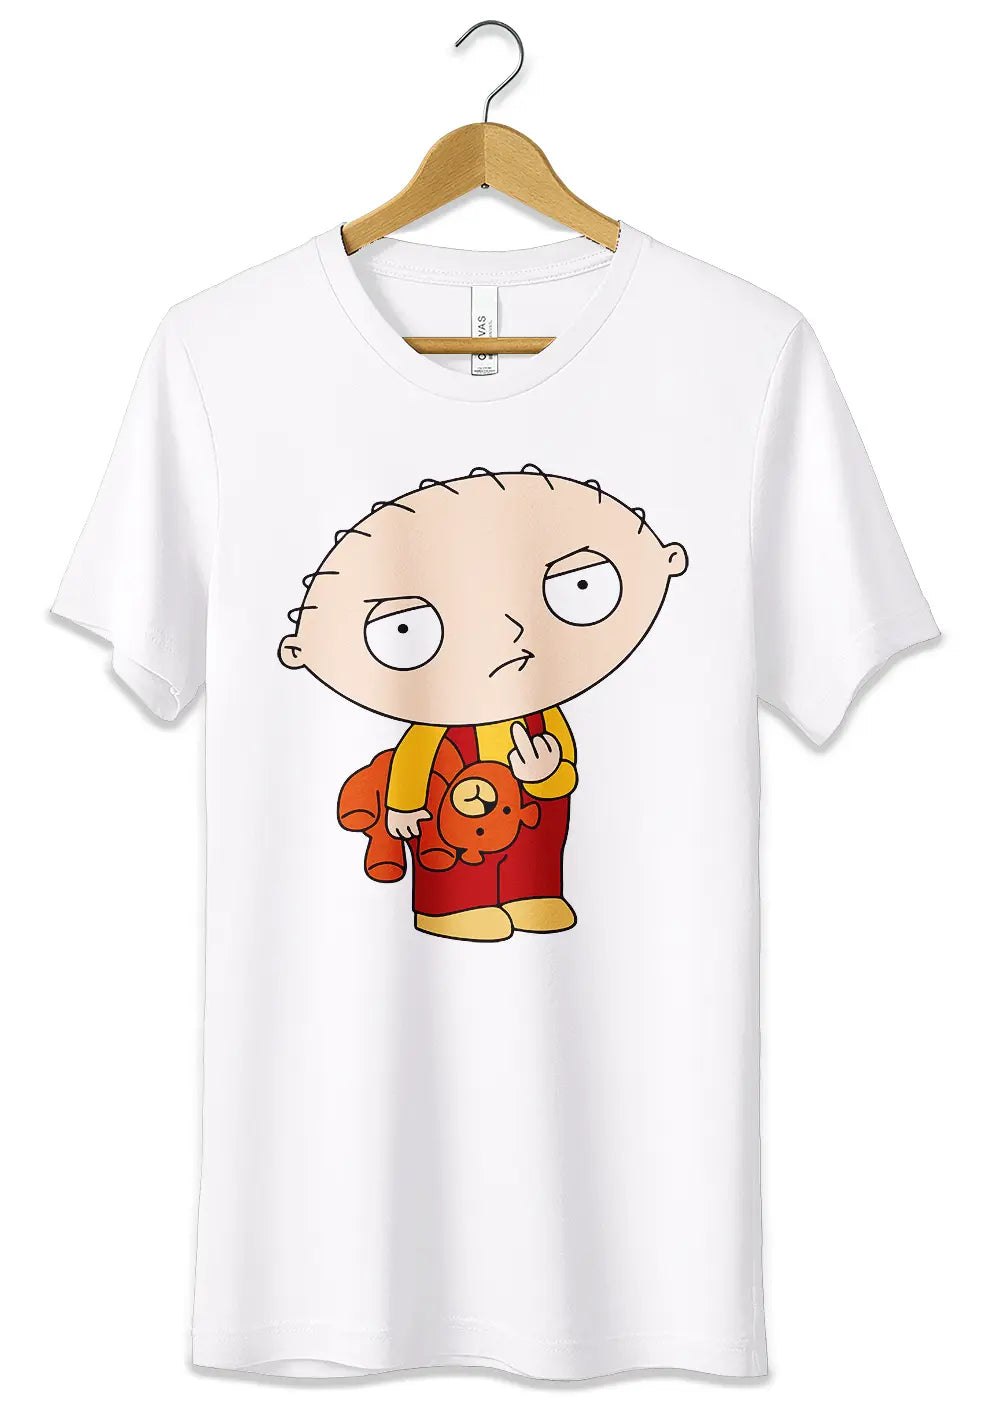 T-Shirt Maglietta Stewie Griffin Family Guy, CmrDesignStore, T-Shirt Maglietta Stewie Griffin Family Guy, T-Shirt